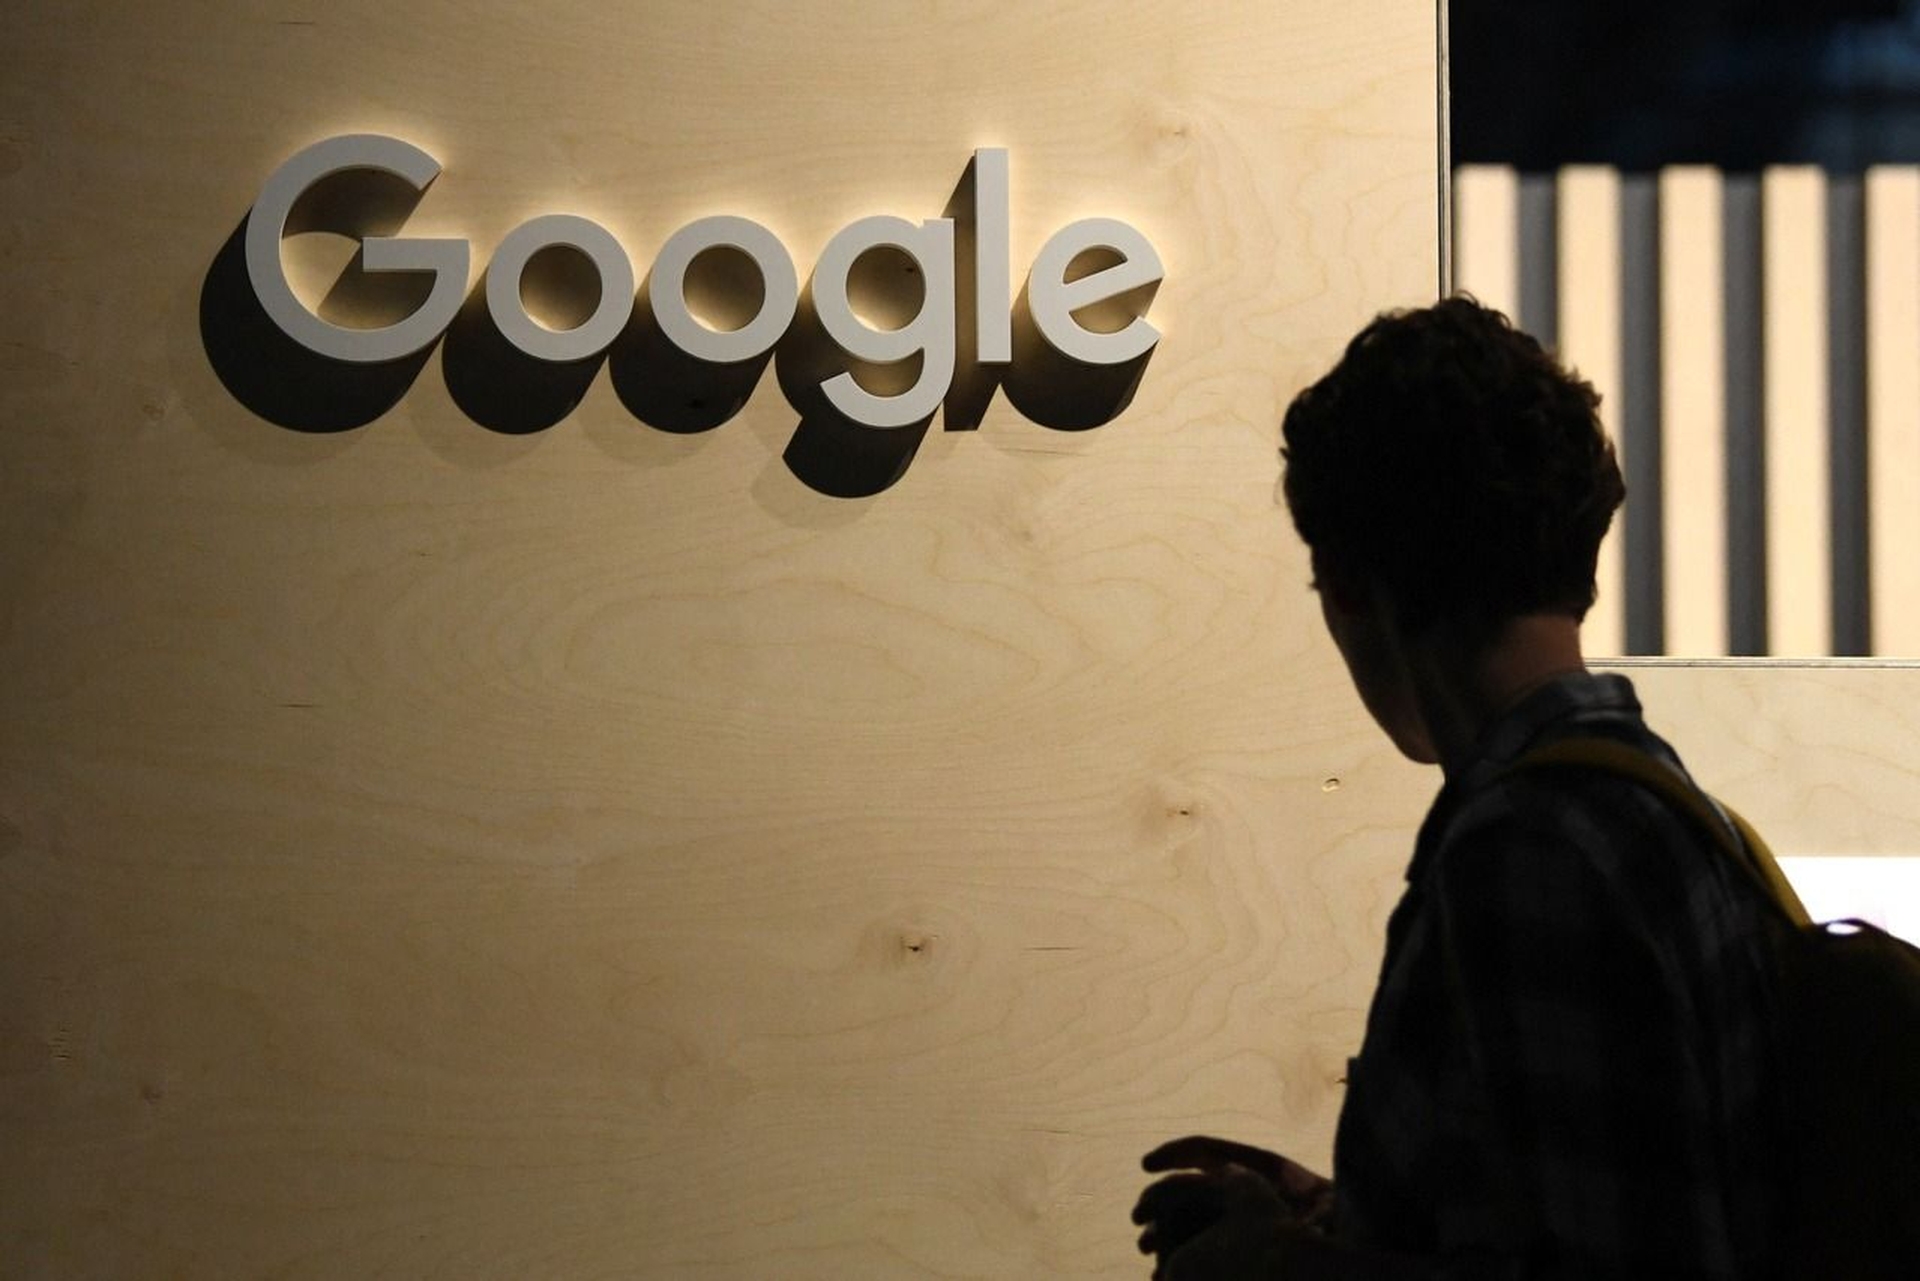 Google beurlaubt einen Techniker, nachdem er behauptet, der Chatbot sei empfindungsfähig